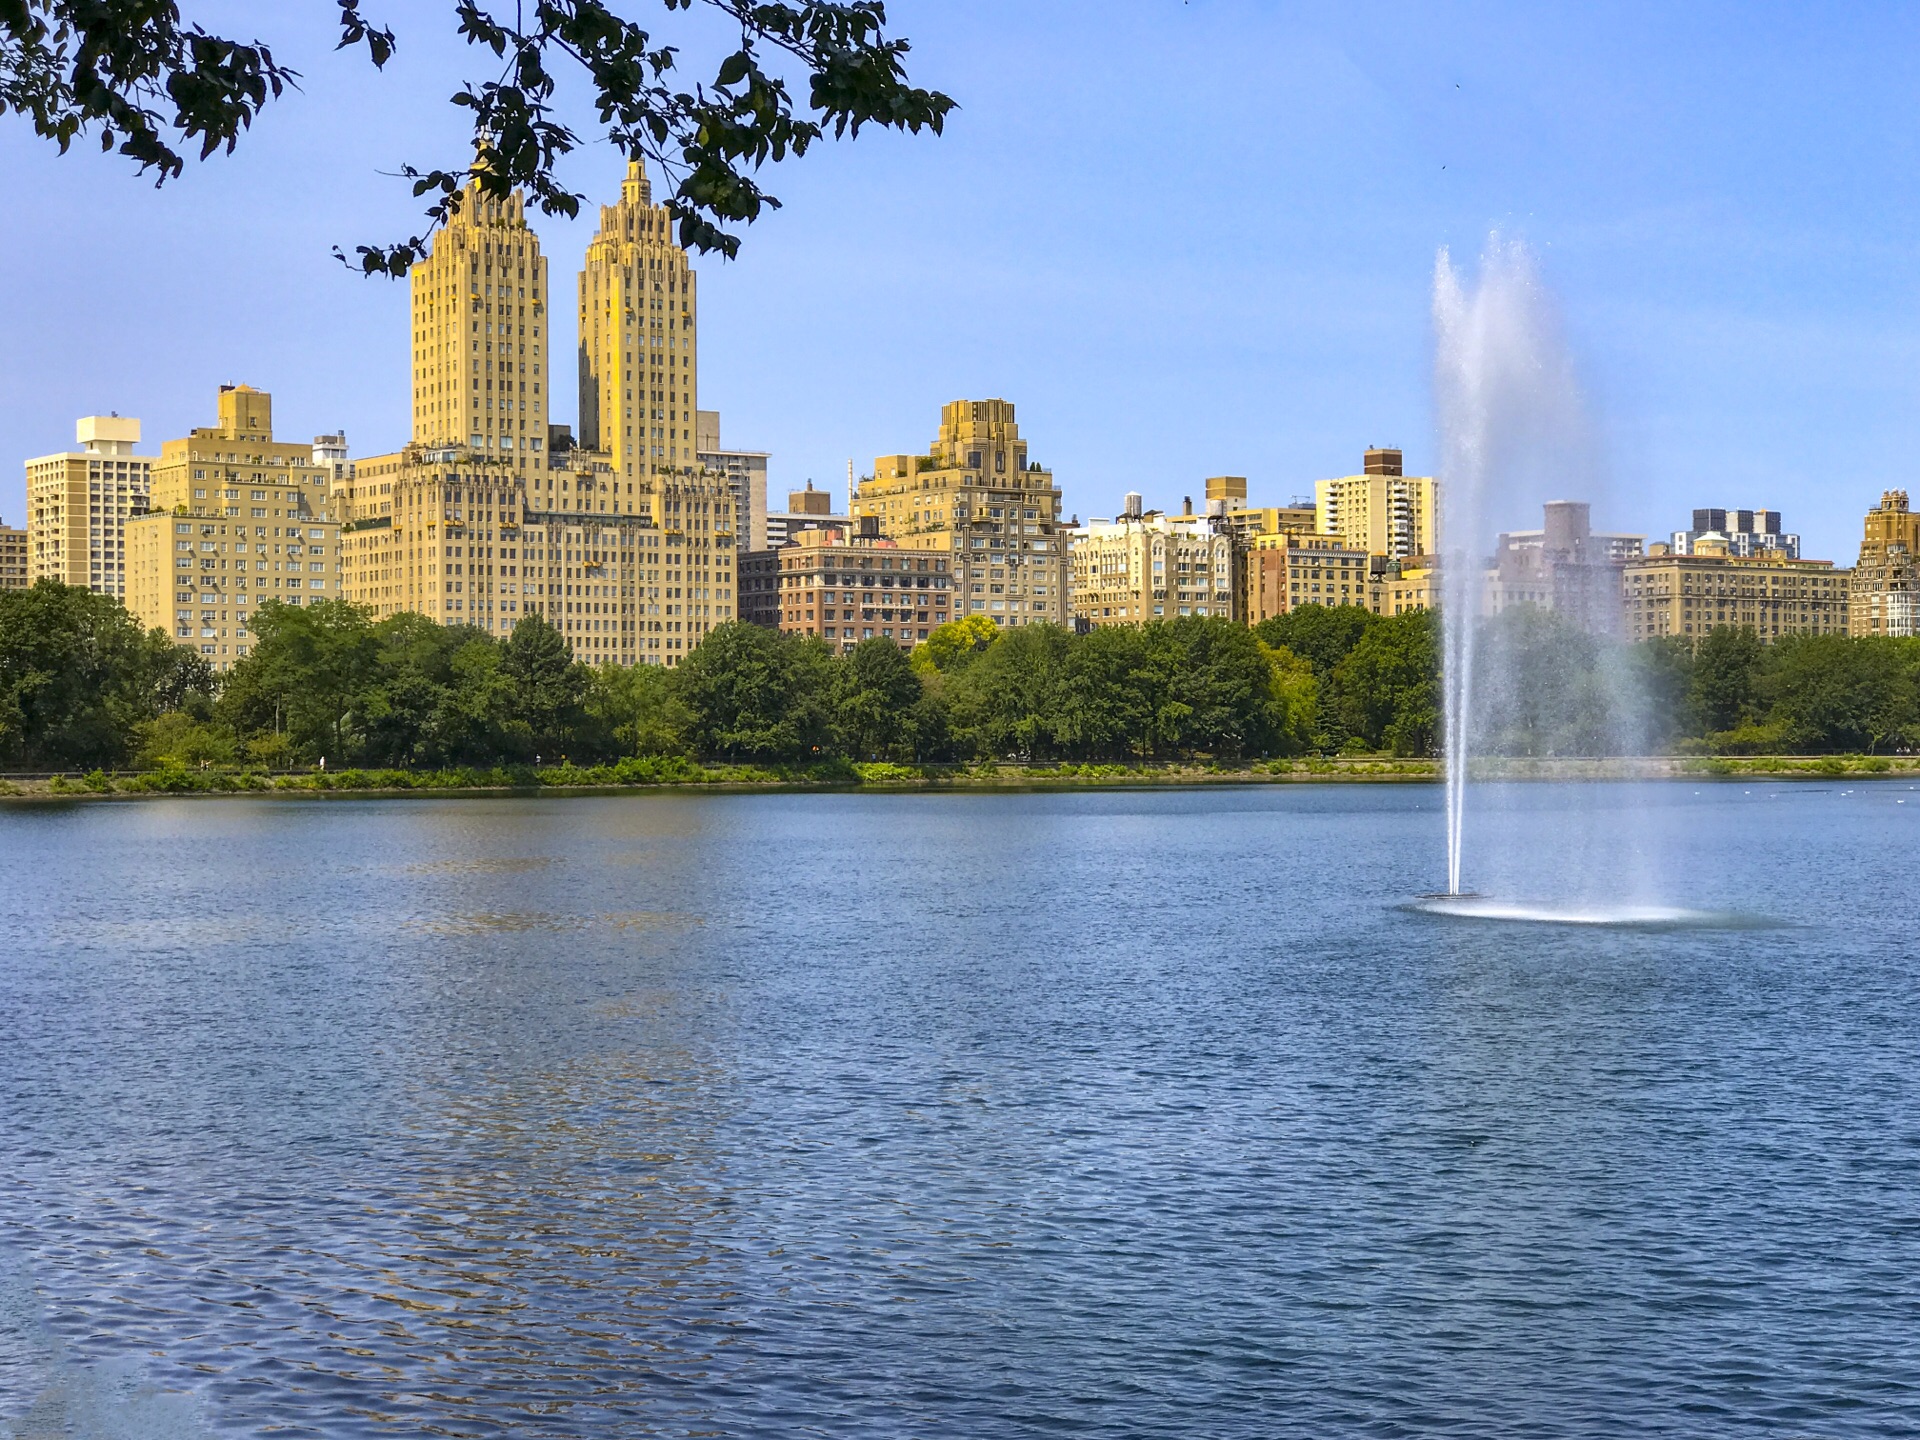 中央公园，纽约 (© Tony Shi Photography/Getty Images) @20200330 | NiceBing 必应美图 - 精彩世界,一触即发